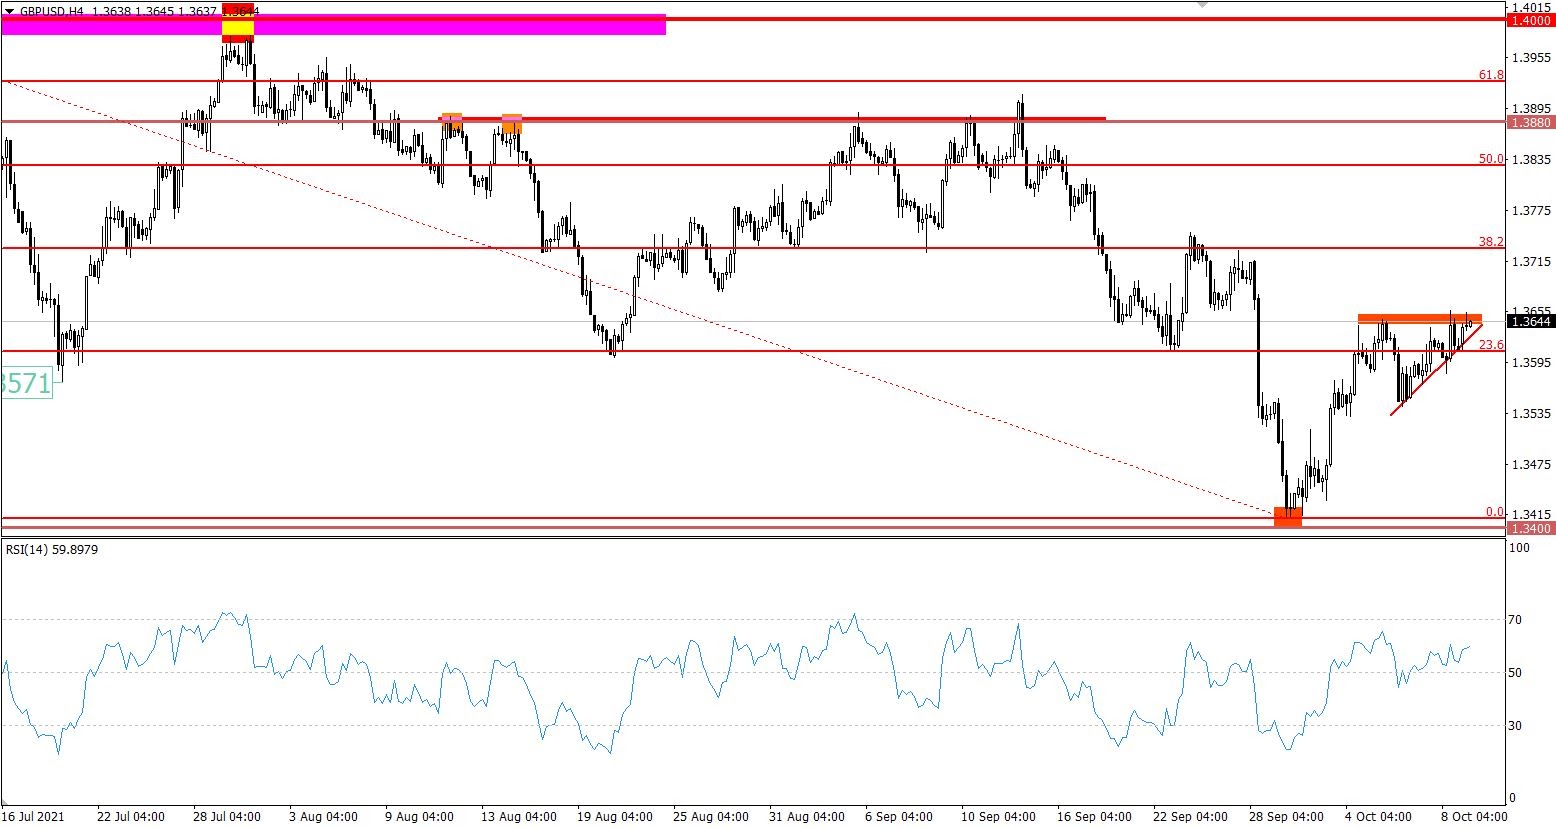 GBP/USD 4-hour chart technical analysis.